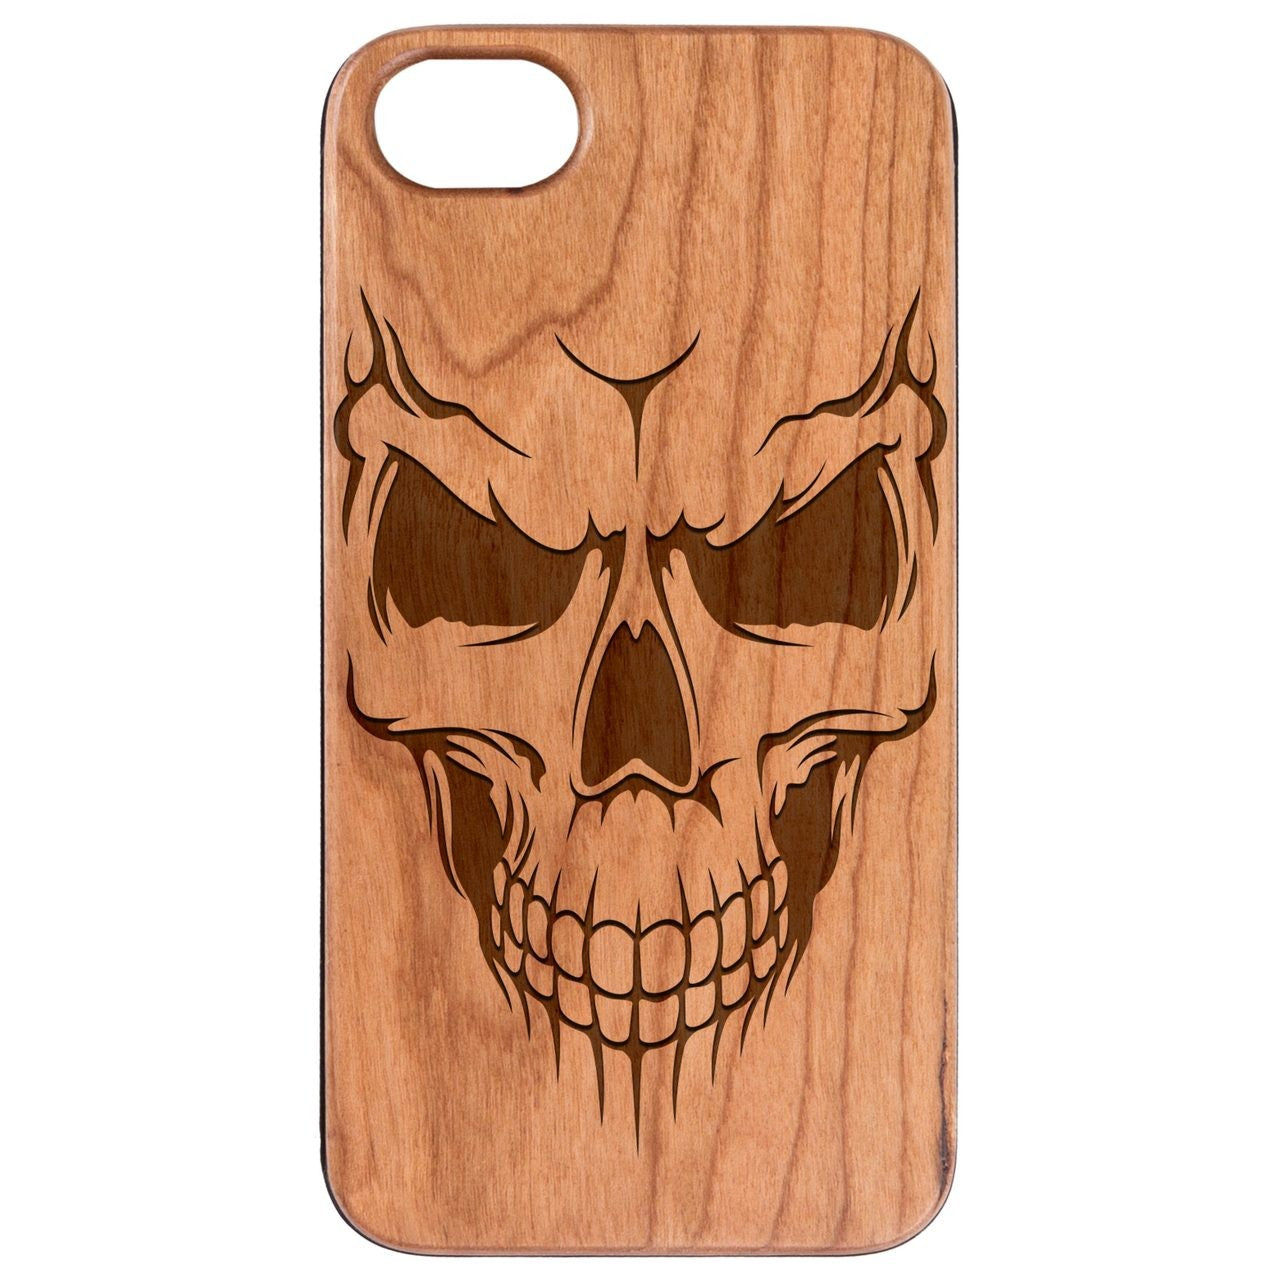  Smiling Skull - Engraved - Wooden Phone Case - IPhone 13 Models